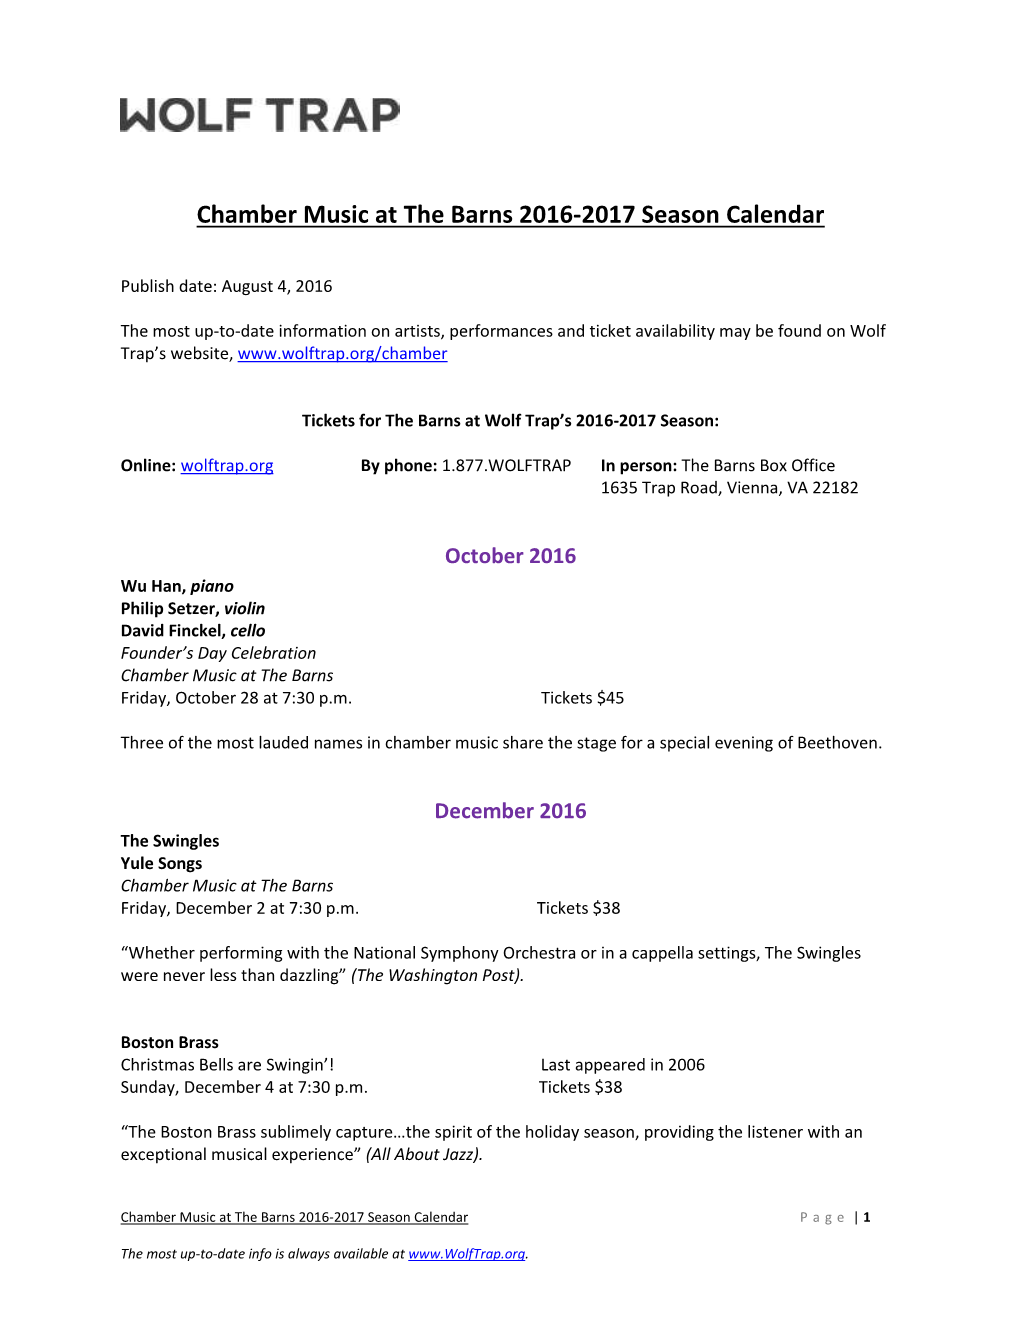 Chamber Music at the Barns 2016-2017 Season Calendar